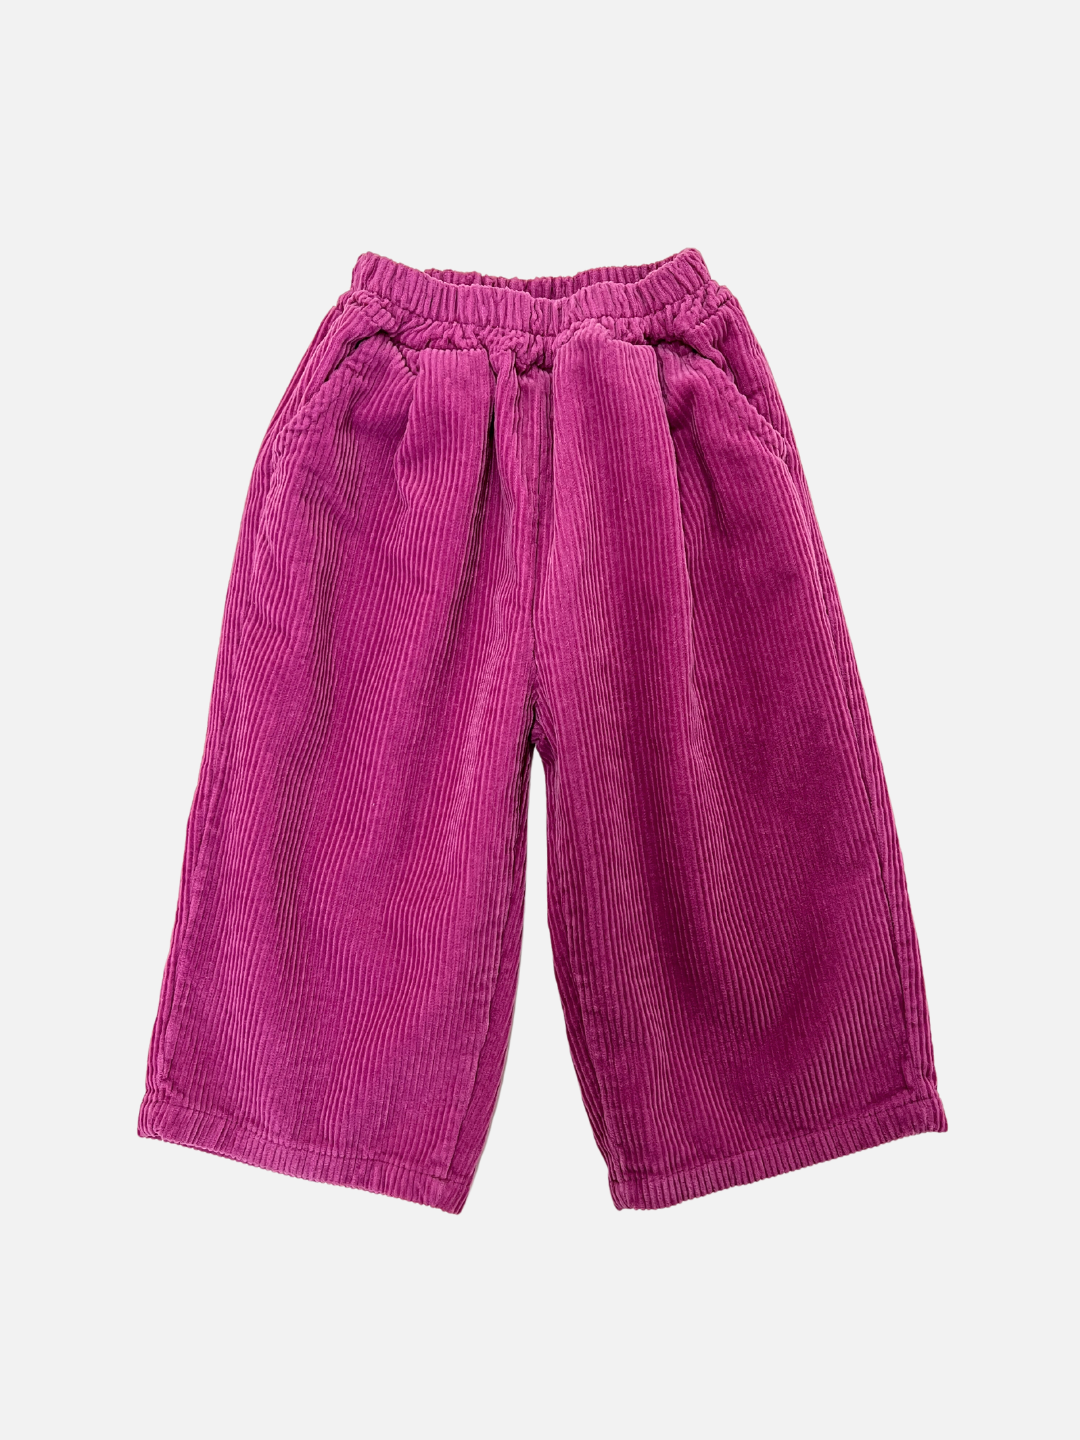 Front view of kids wide-leg corduroy pants in magenta pink.